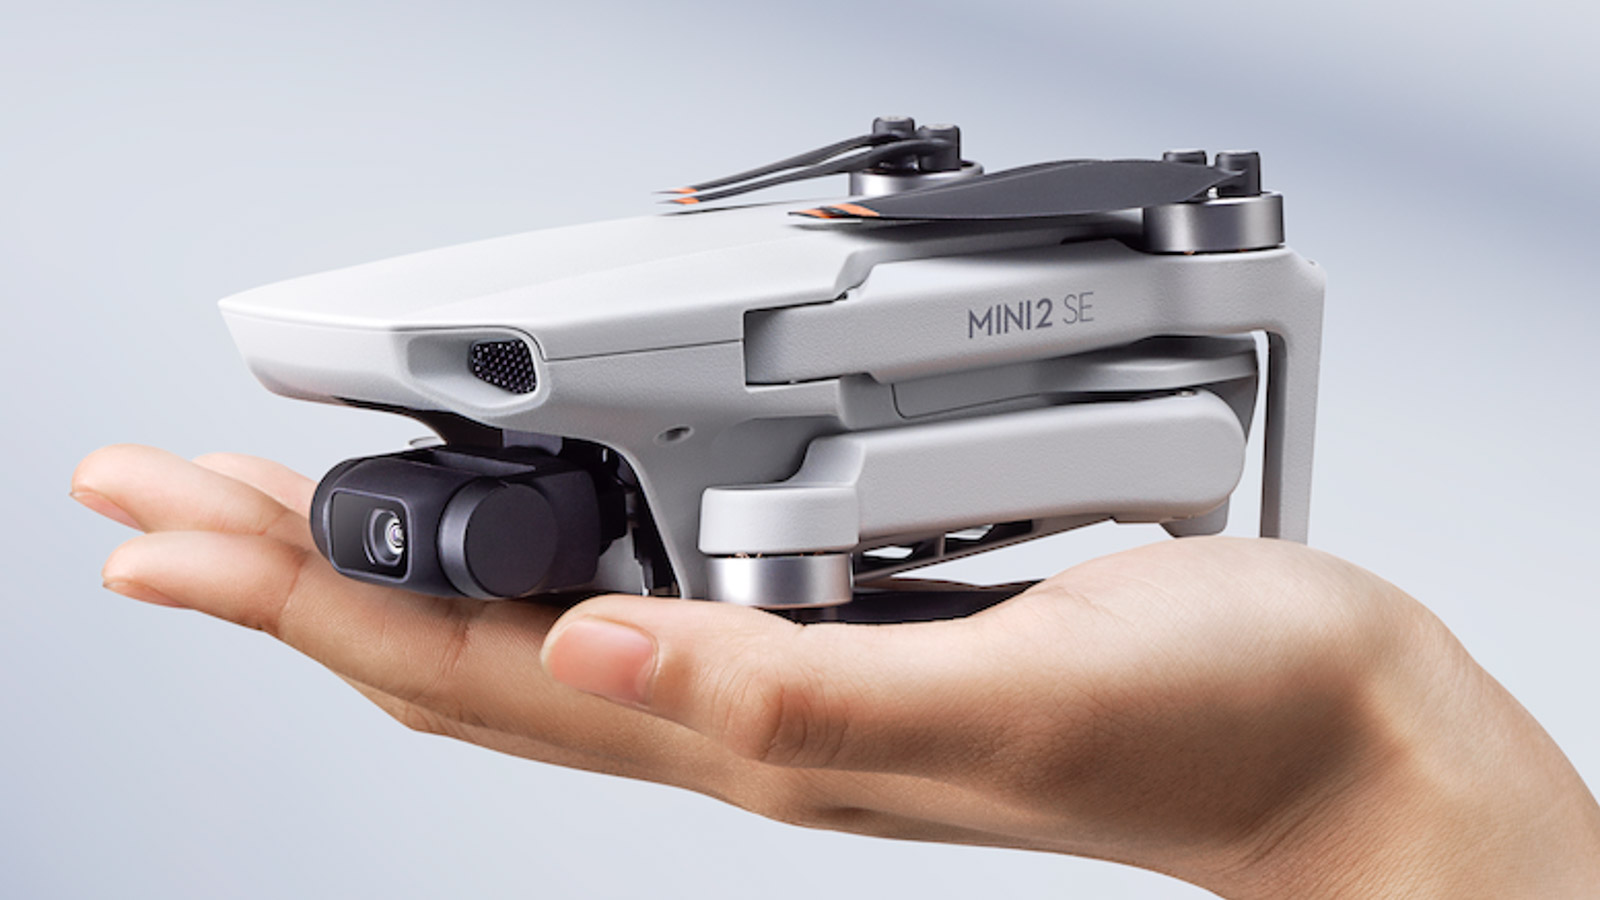 DJI’s Mini 2 SE ultraportable drone takes to the skies